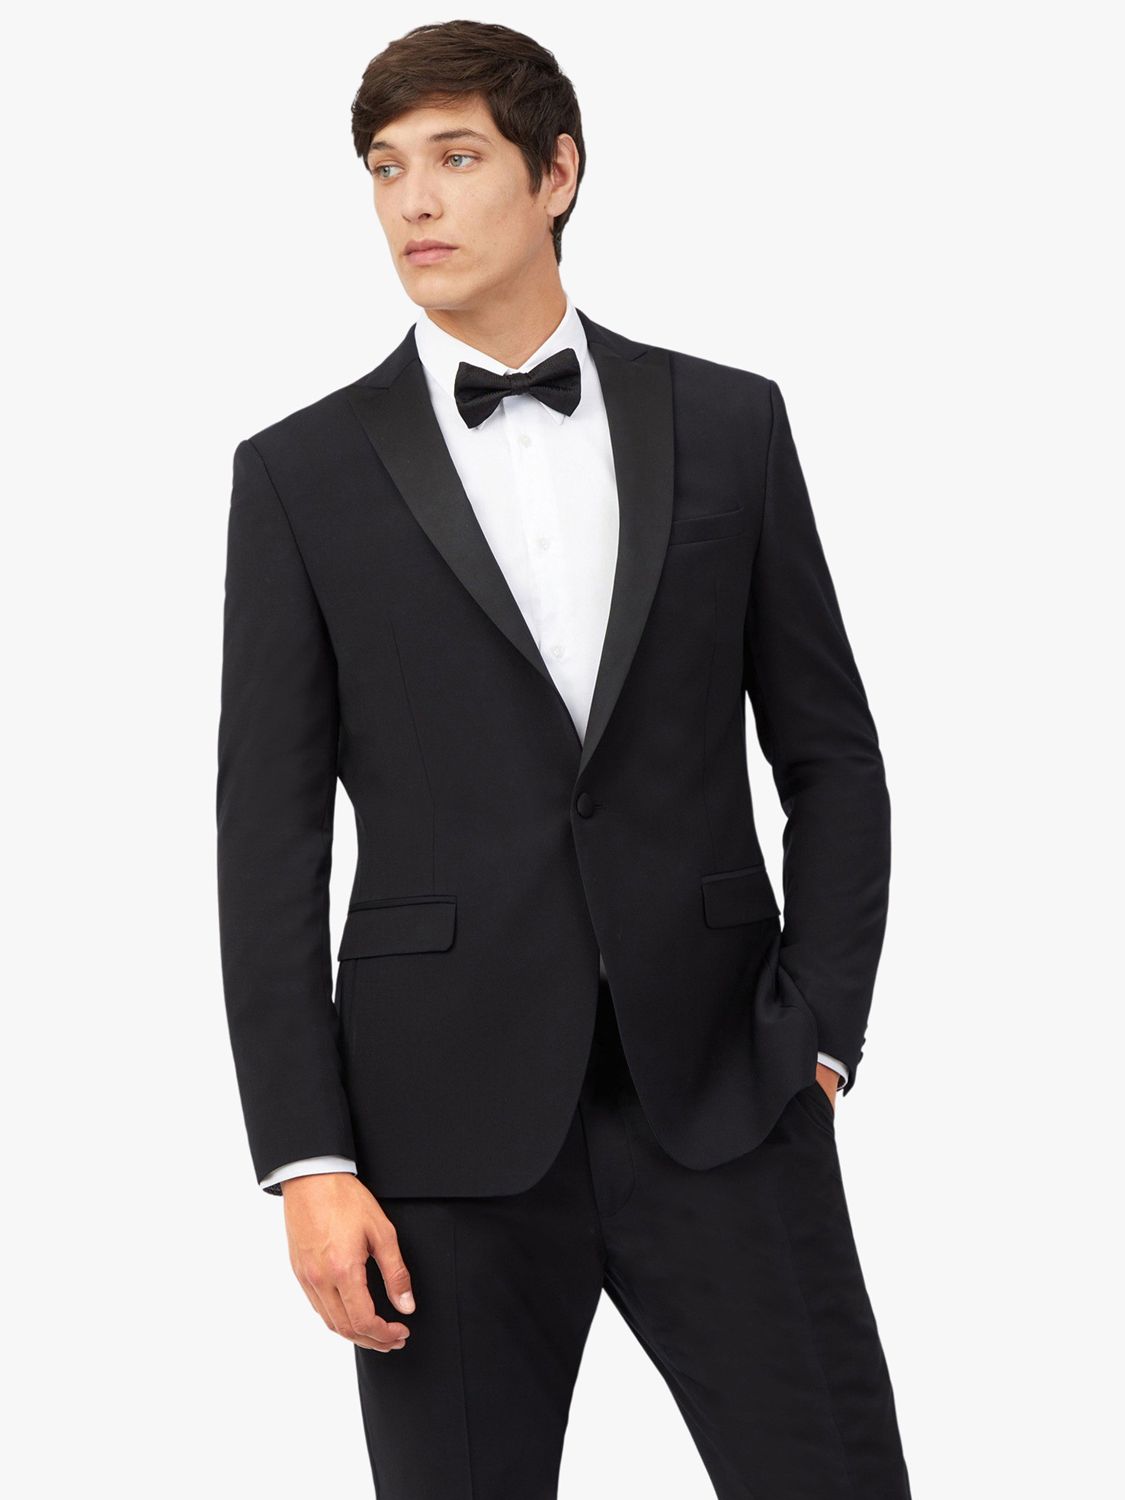 Ted Baker Wool Blend Tuxedo Suit Jacket, 290 Black, 44R